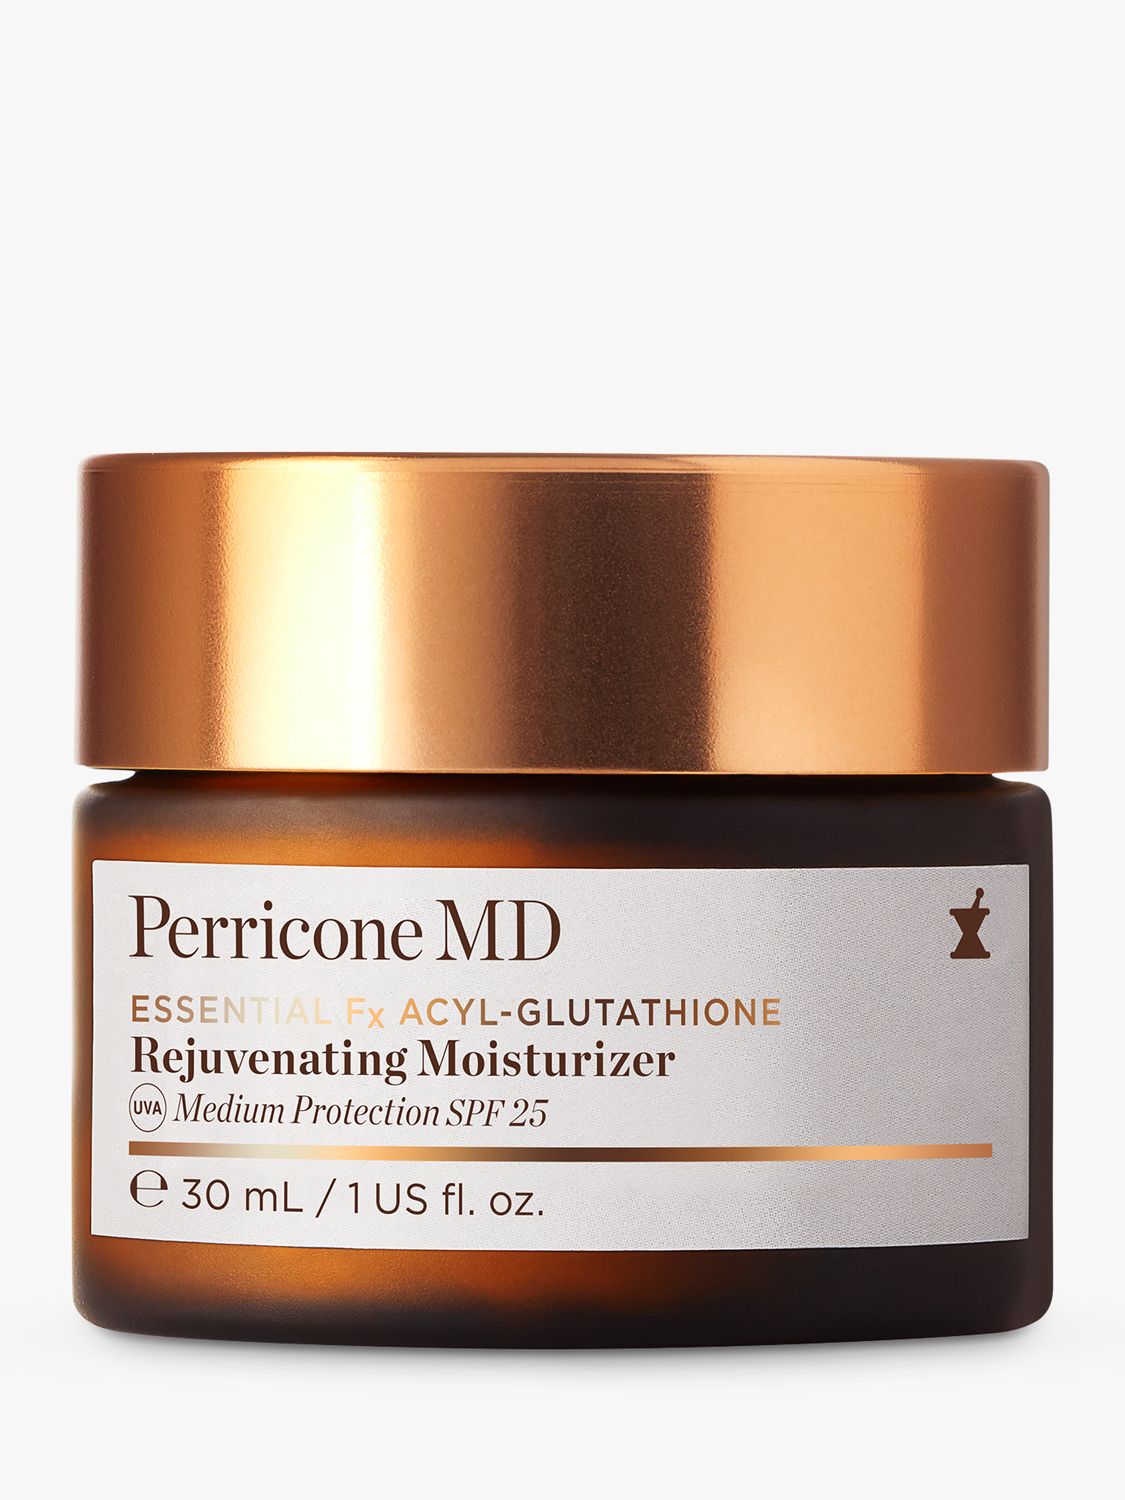 Perricone MD Essential Fx Acyl-Glutathione Rejuvenating Moisturiser SPF 25, 30ml 1